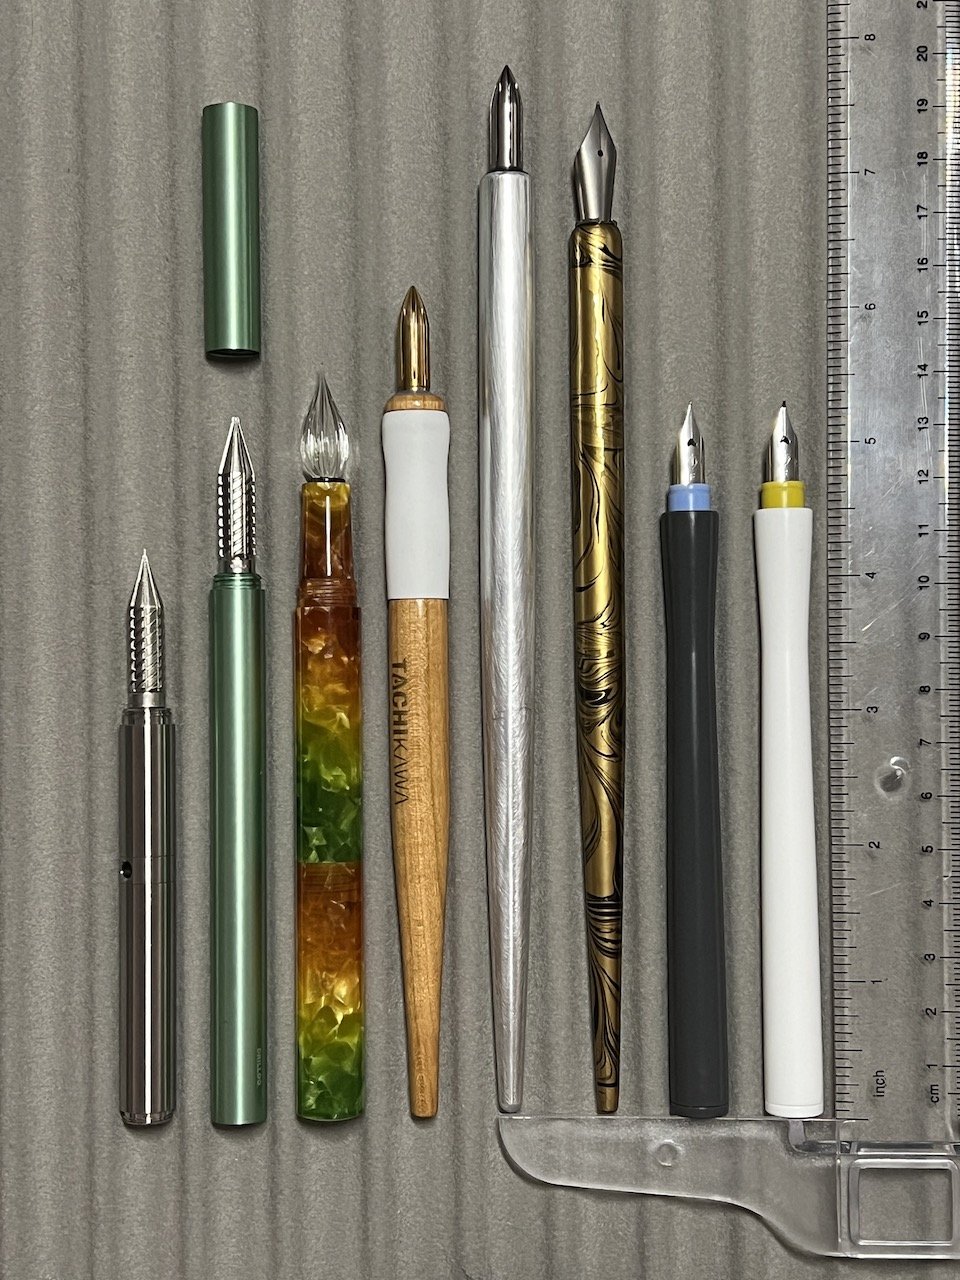 Glass Calligraphy Dip Pen & Ink Set Shimmering Colors